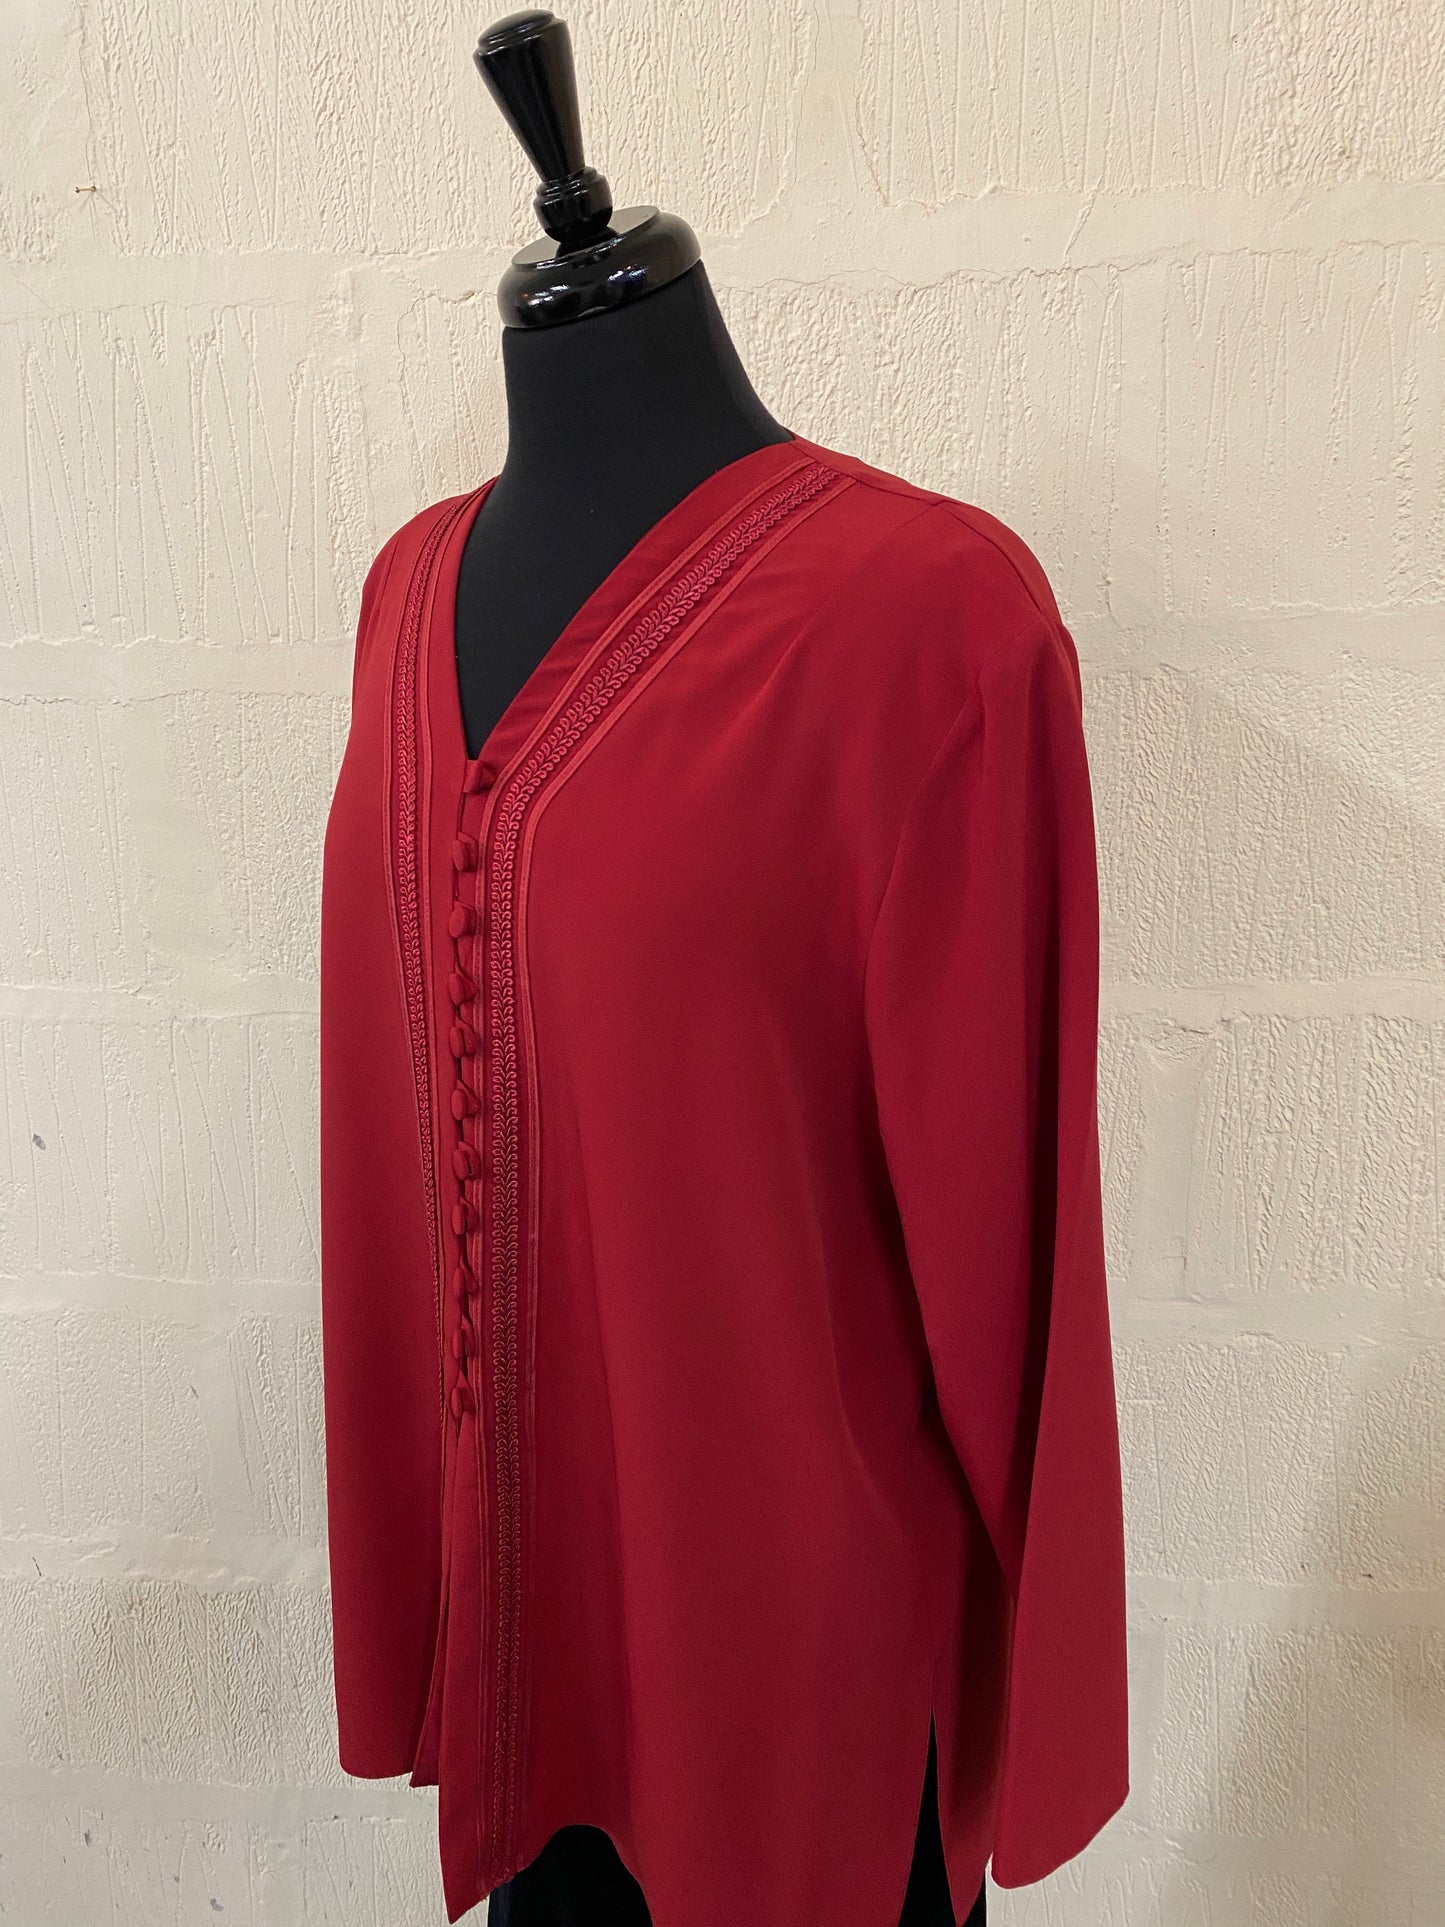 Vintage Red Loose Fit Shirt Size 18